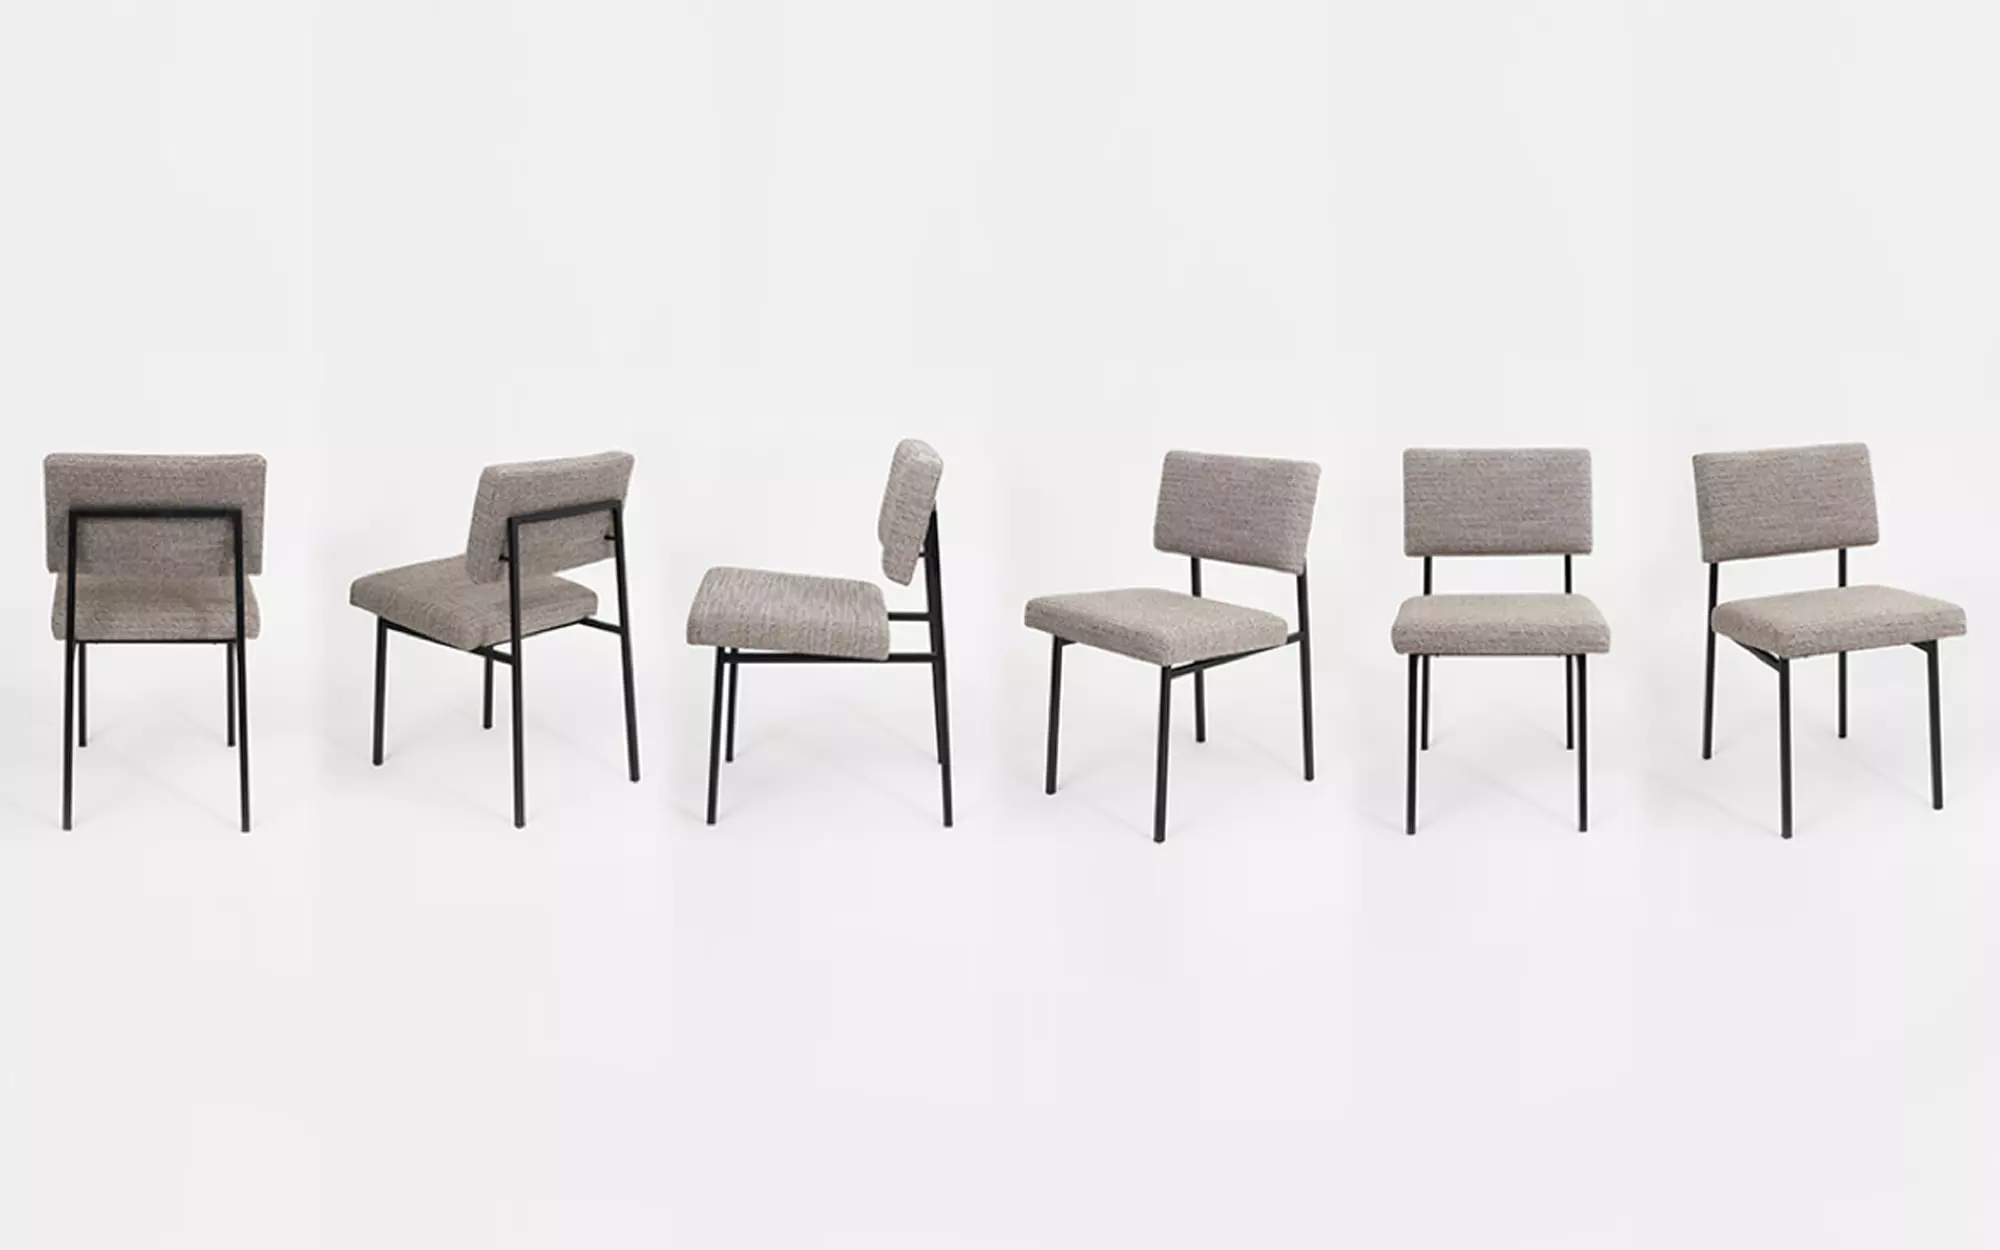 Seating (6) - Gérard Guermonprez  - Pendant light - Galerie kreo